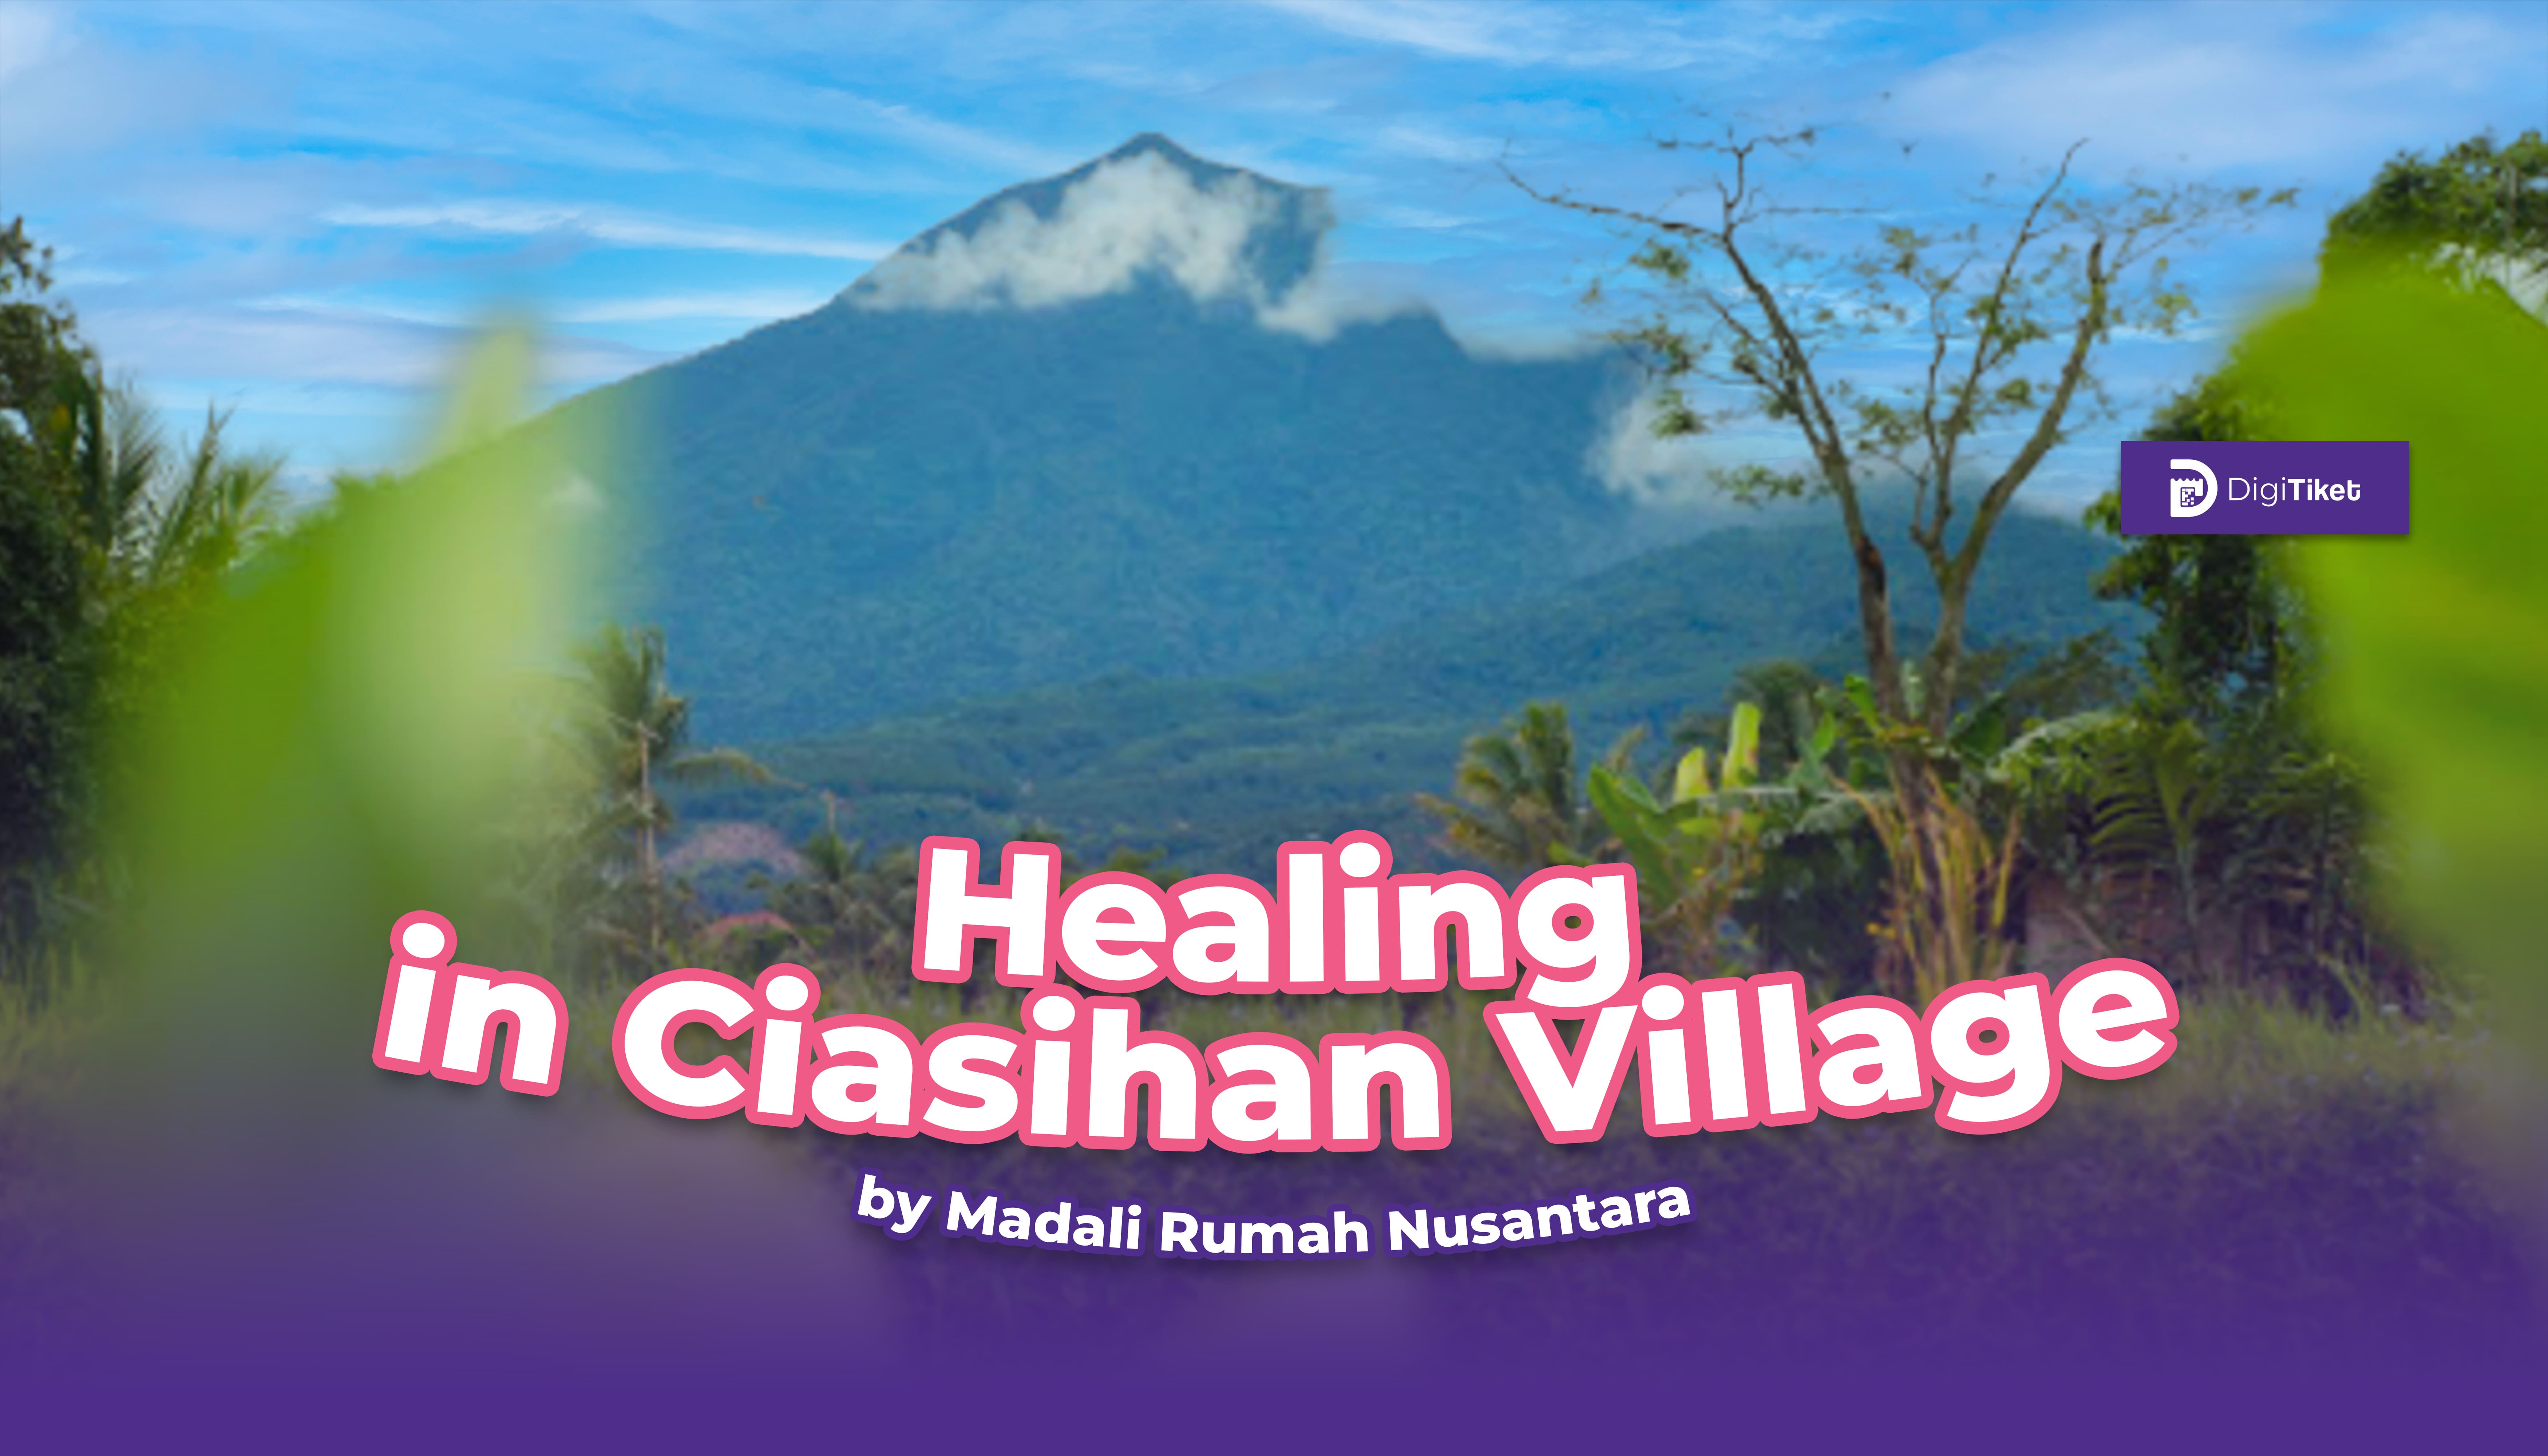 Healing in Ciasihan Village by Madali Rumah Nusantara